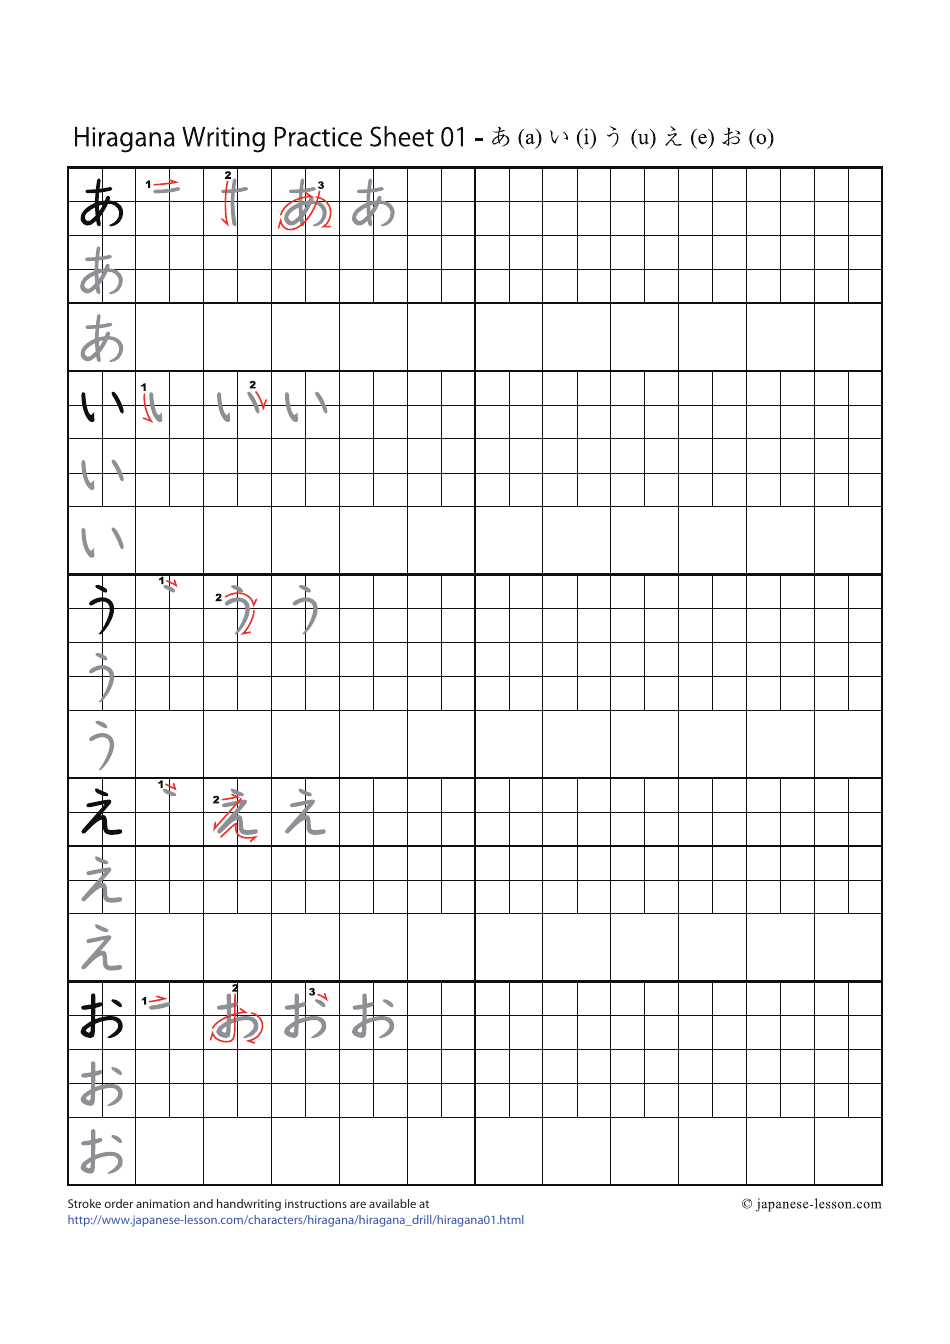 Hiragana Writing Practice Sheet - Japanese-Lesson, Page 1